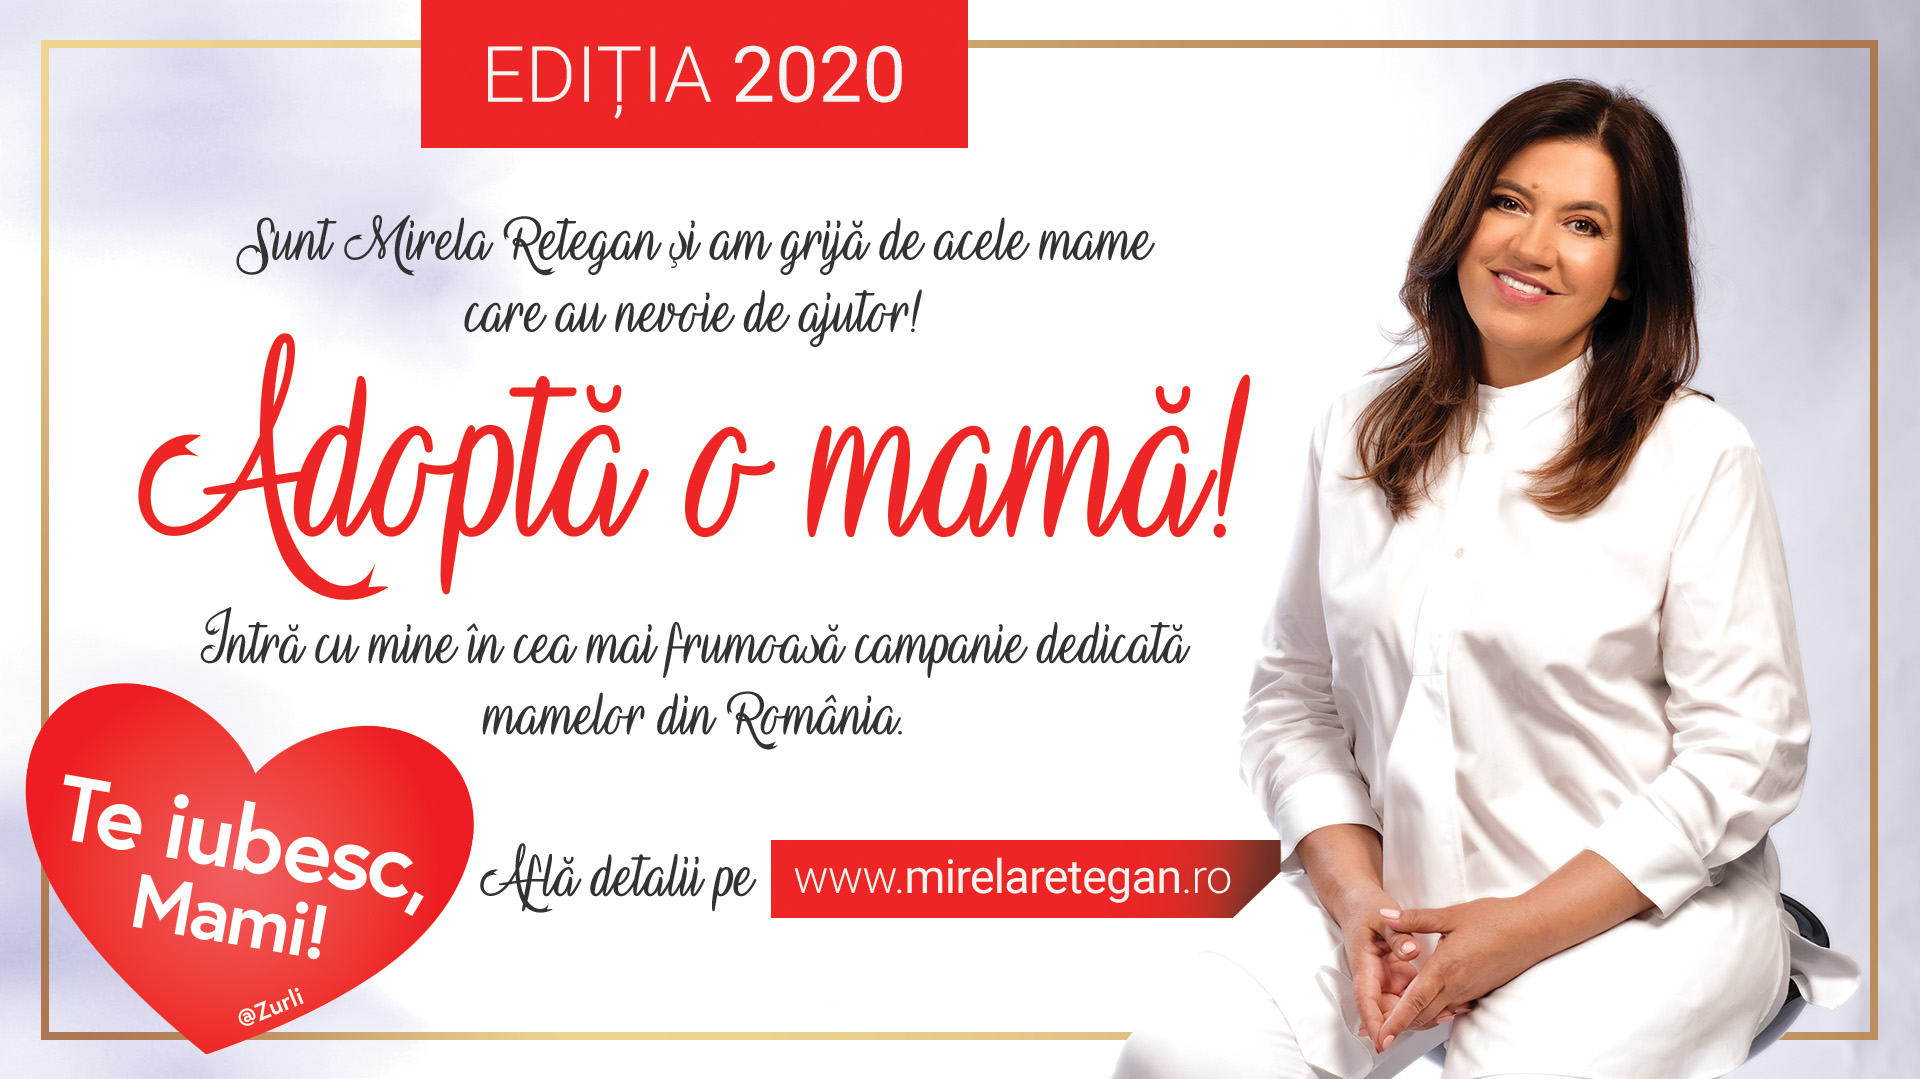 https://www.europafm.ro/wp-content/uploads/2020/02/adopta-o-mama-Mirela-Retegan.jpg